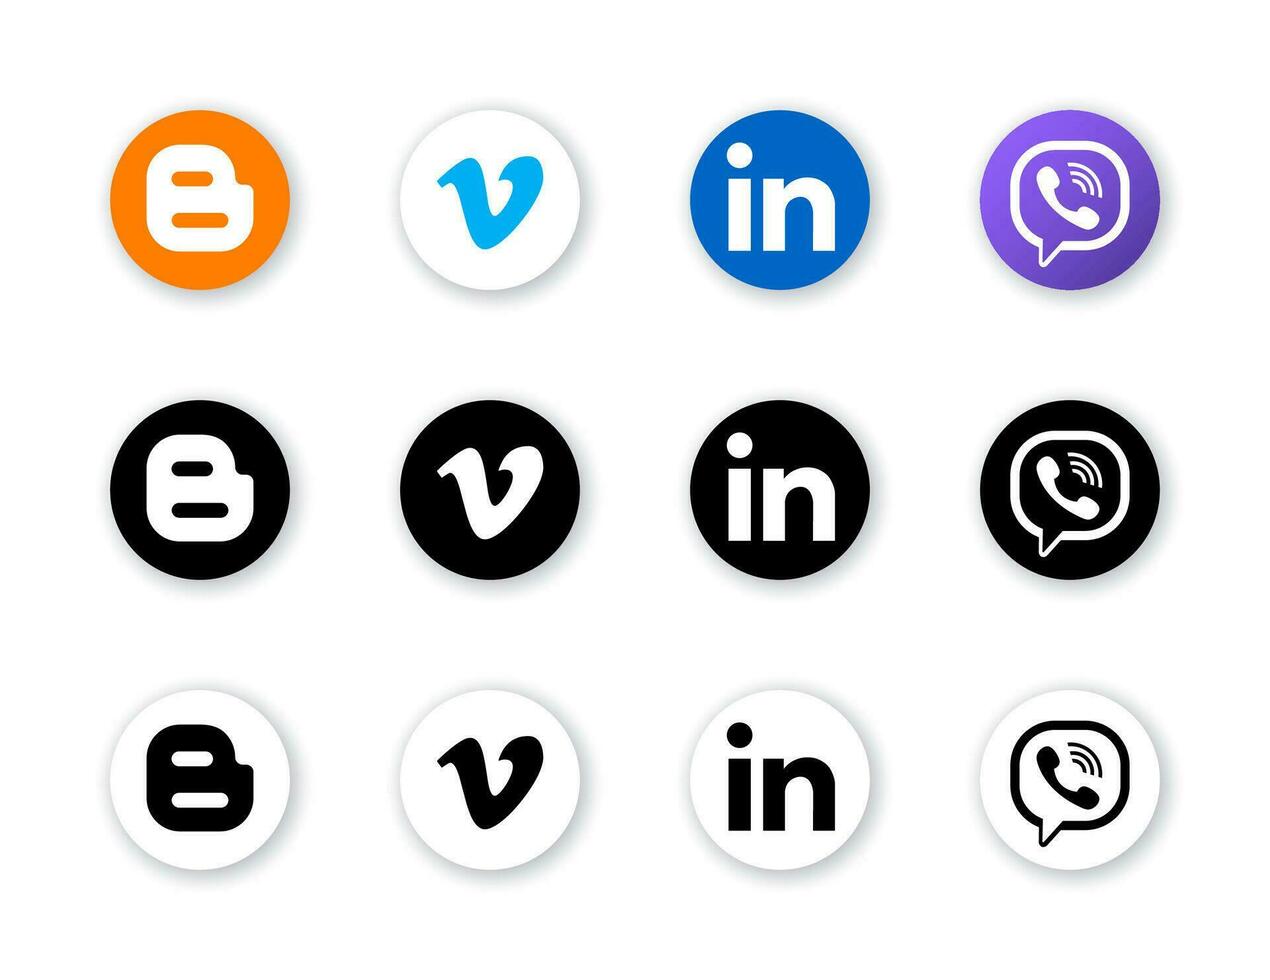 social medios de comunicación íconos conjunto - bloguero, vimeo, vibración, Linkedin. negro y blanco versión vector